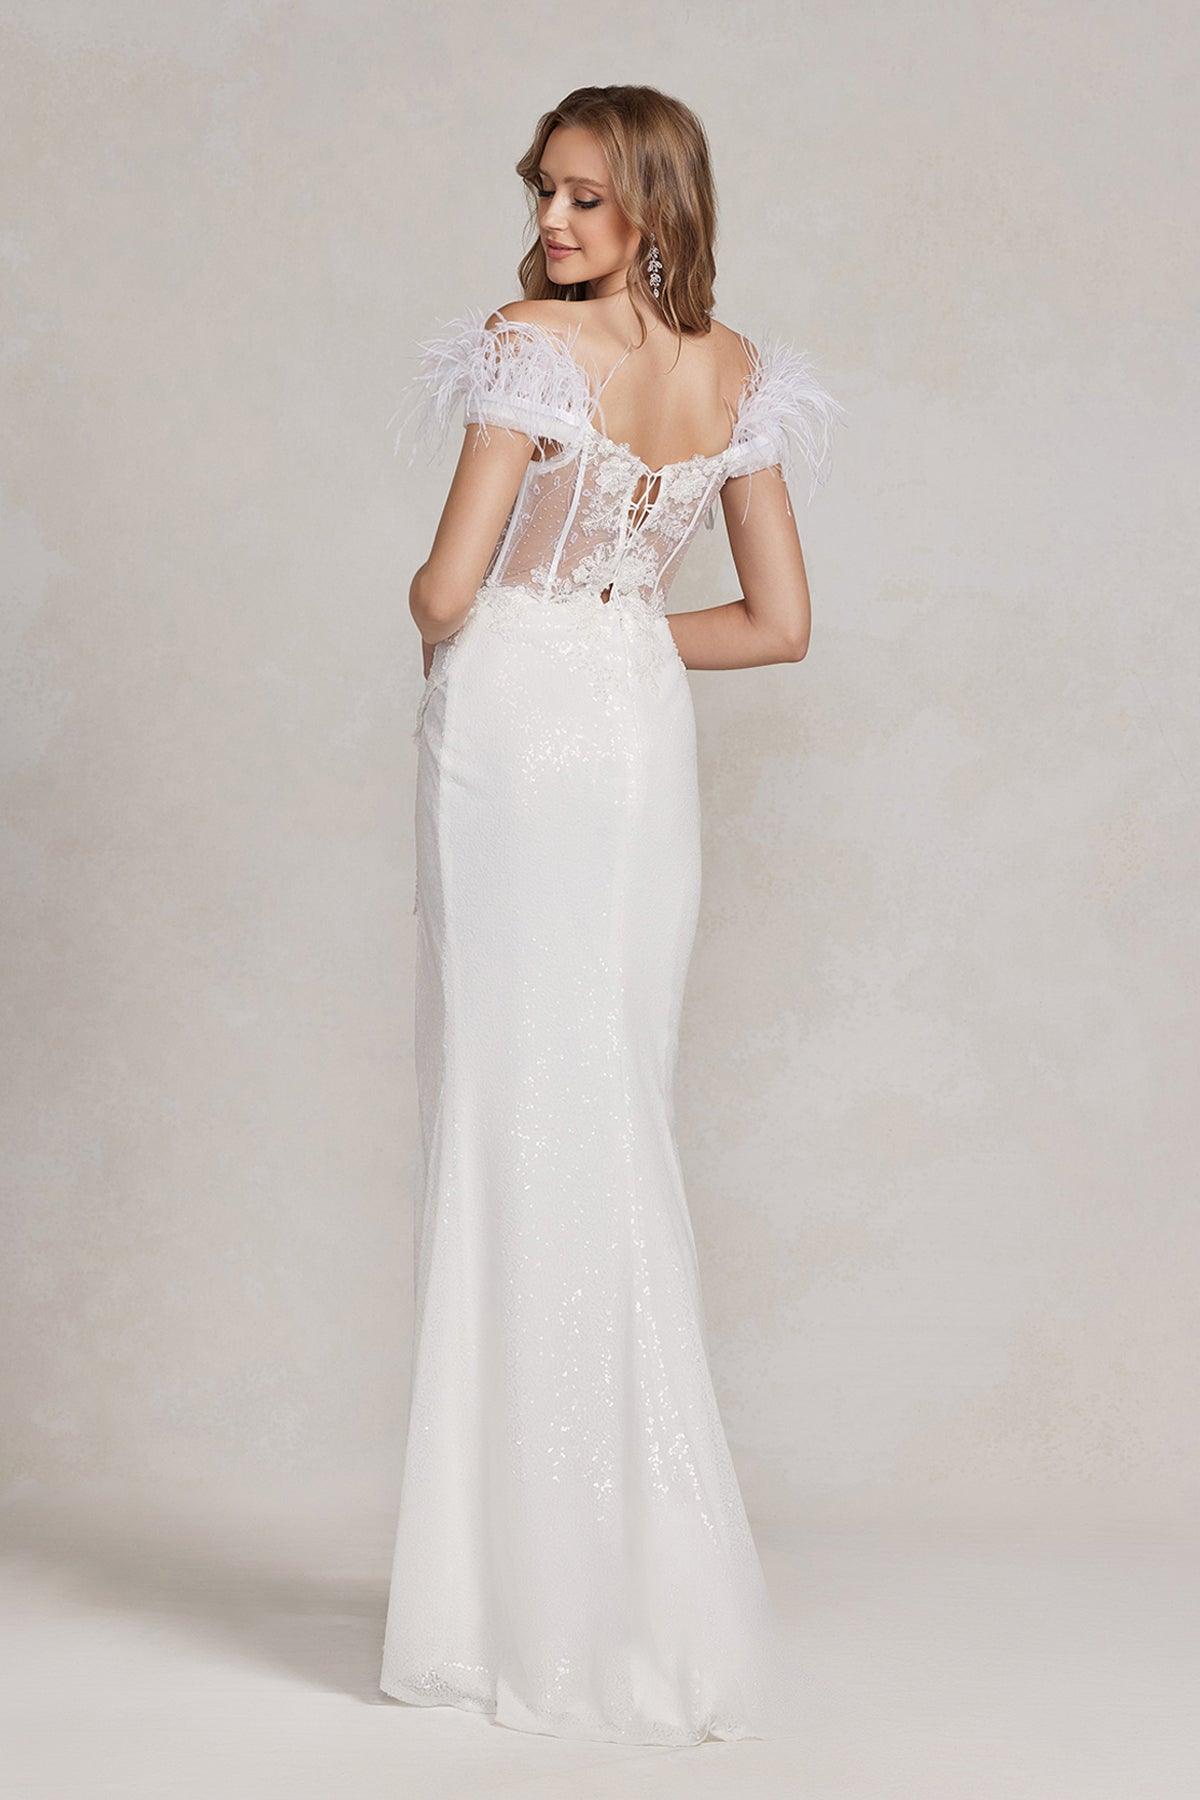 Nox Anabel S1229W Long Off Shoulder Wedding Dress White